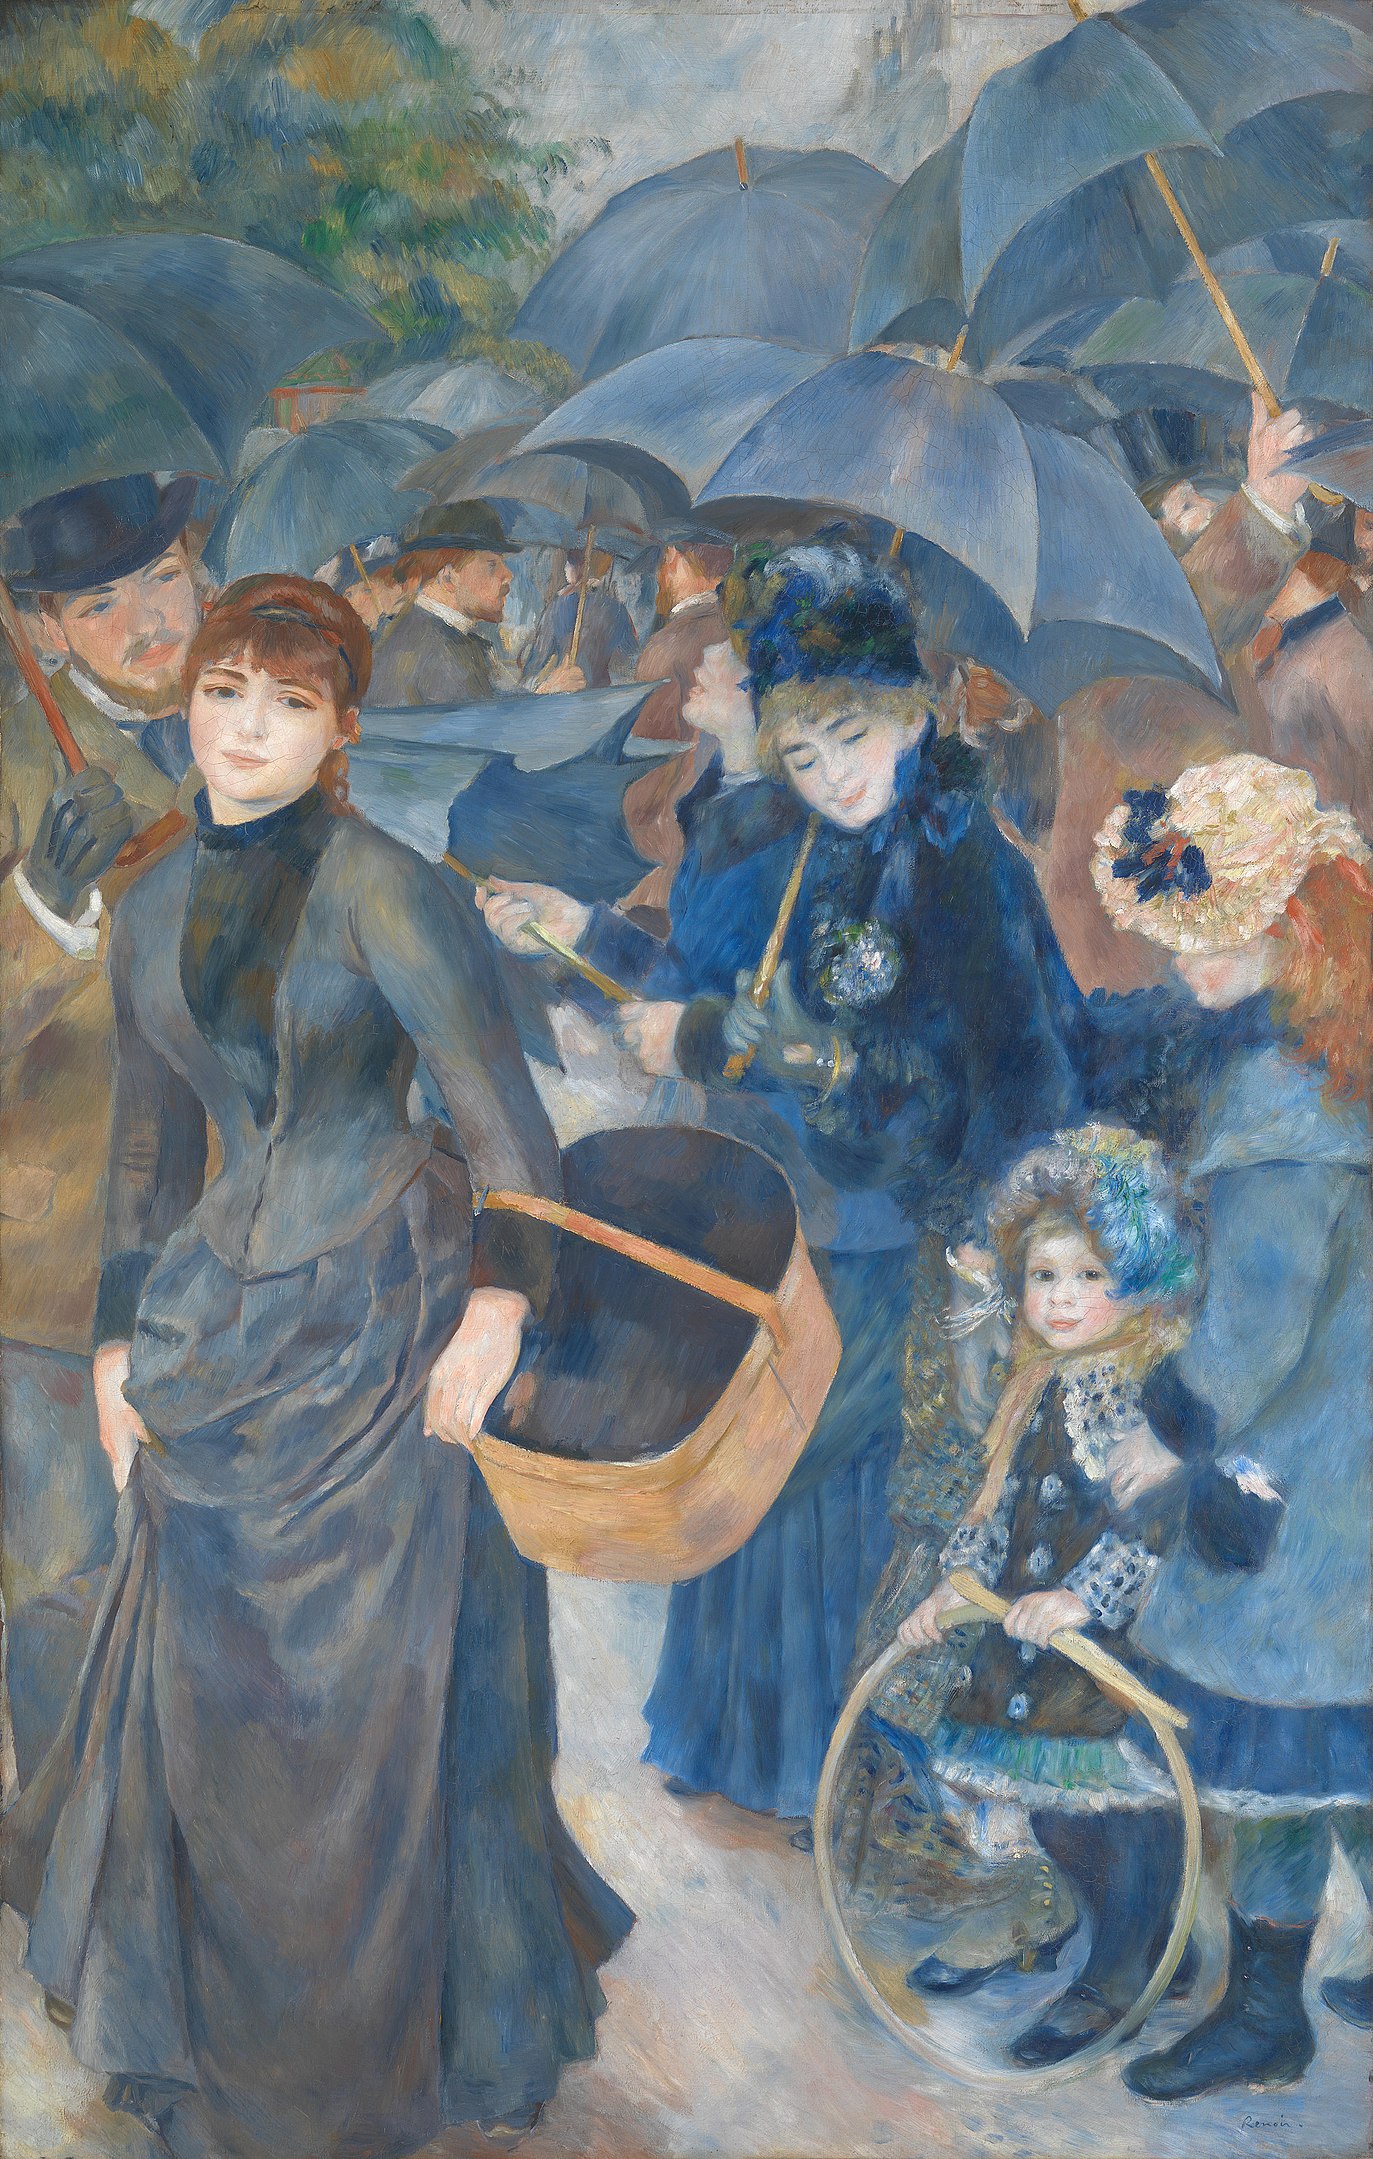 雨傘 by Pierre-Auguste Renoir - 1880–1886年頃 - 180.3 × 114.9 cm 